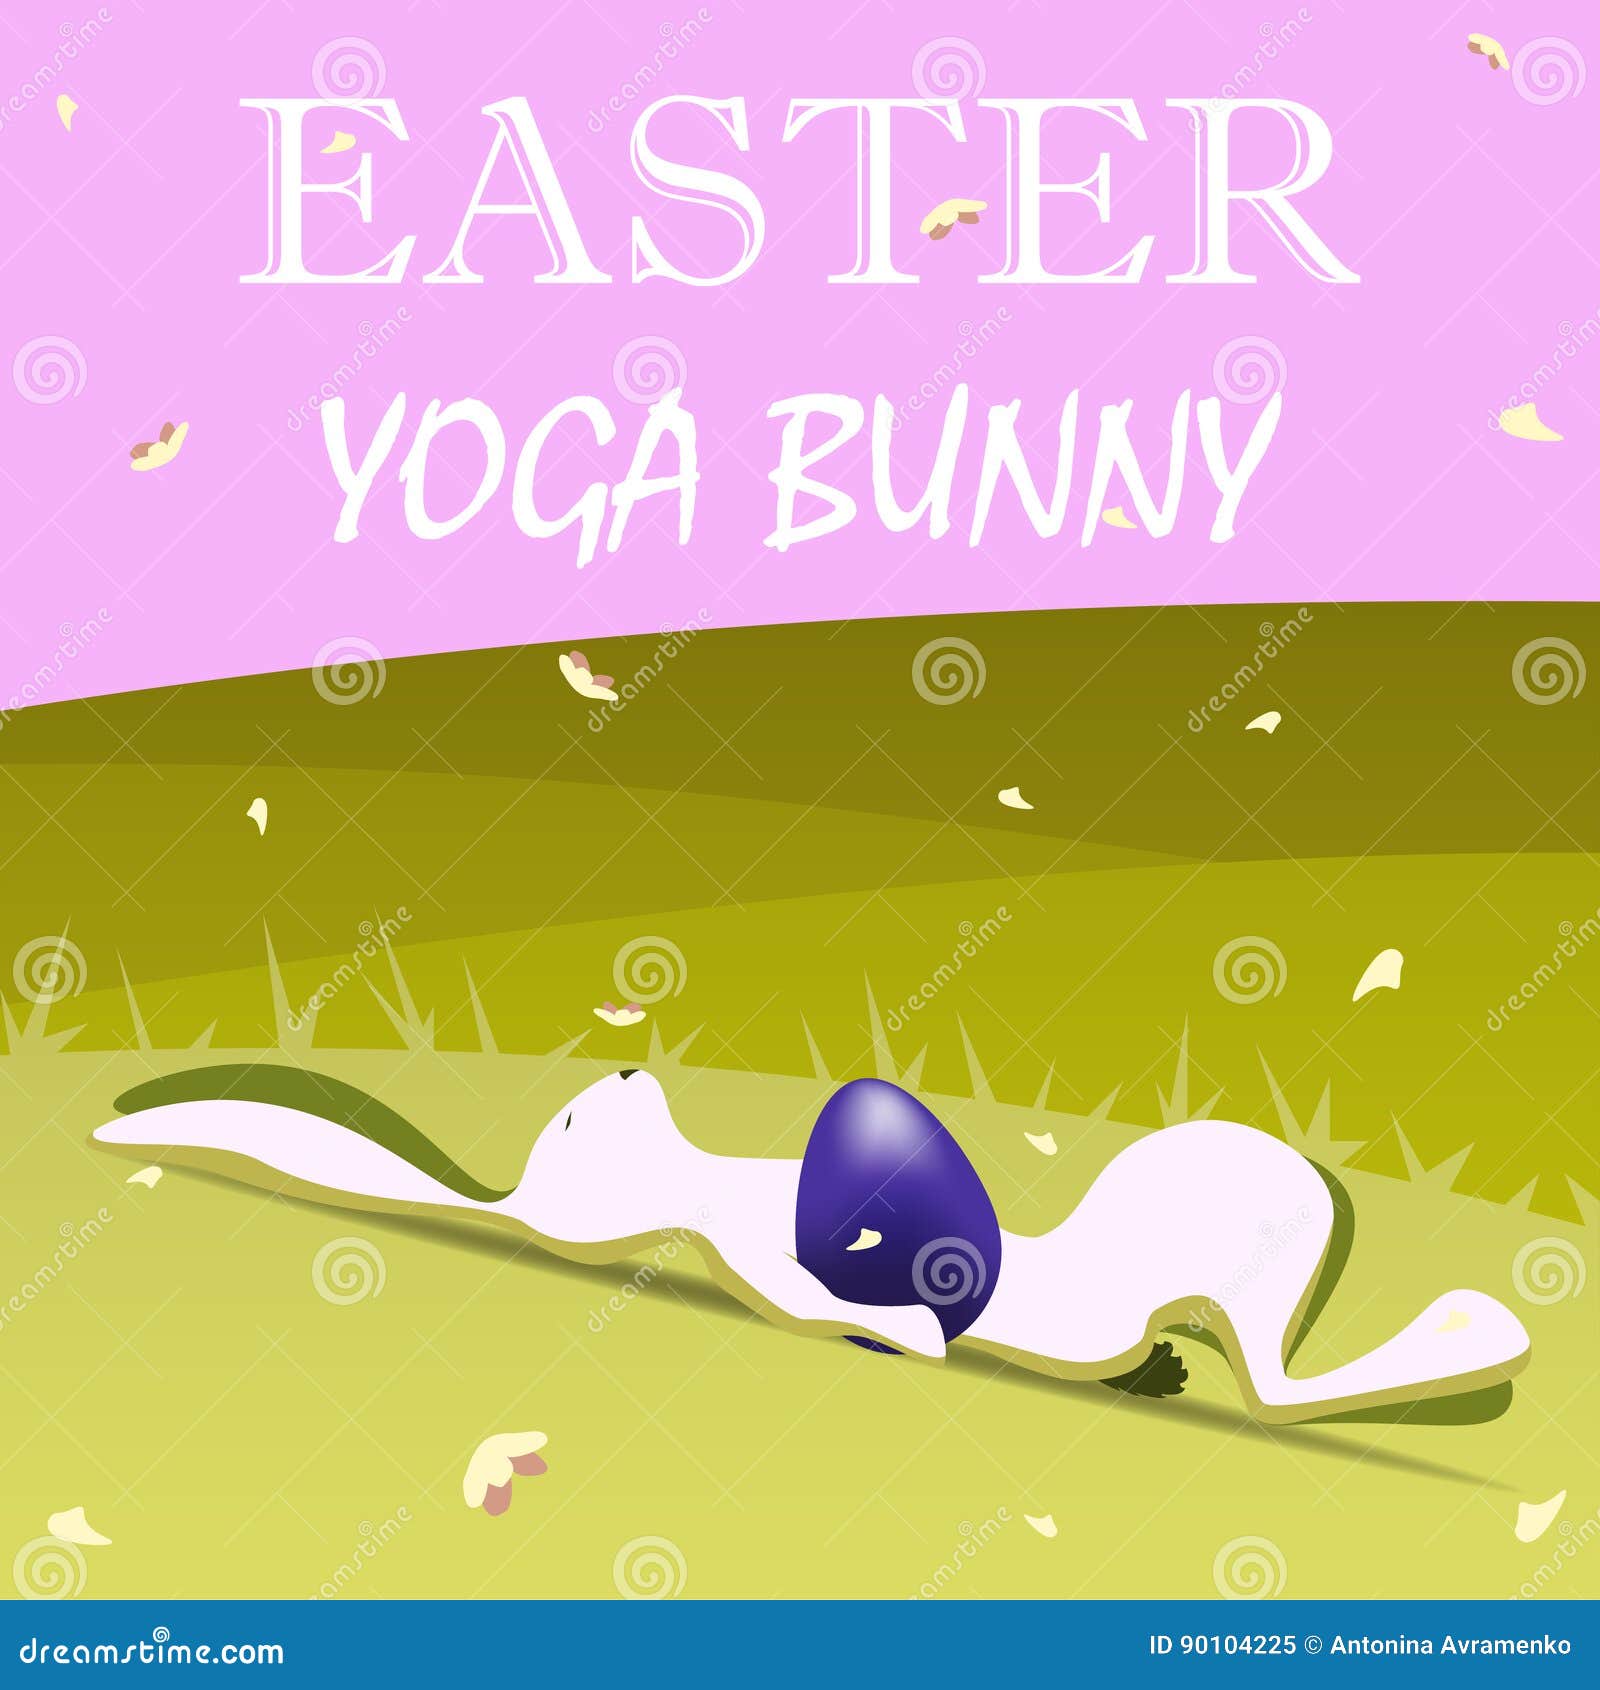 Easter yoga bunny. stock illustration. Illustration of easter - 90104225